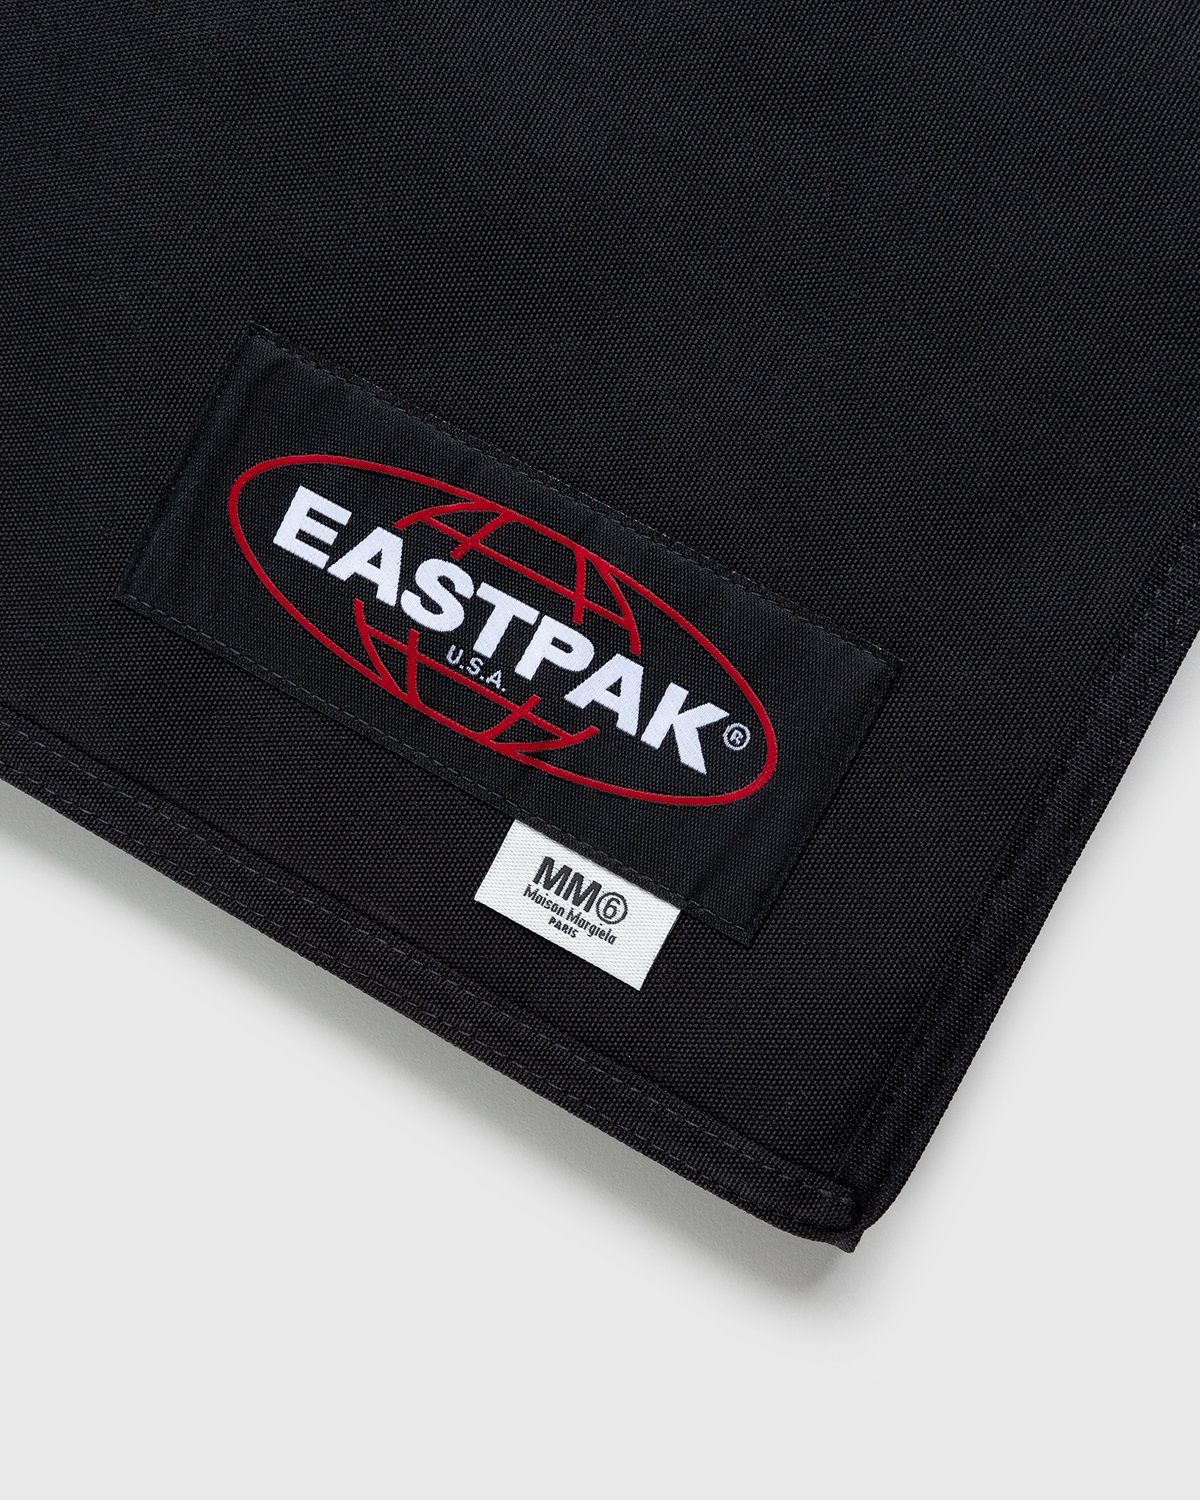 MM6 Maison Margiela x Eastpak - Borsa Tracolla Shoulder Bag Black - Accessories - Black - Image 6